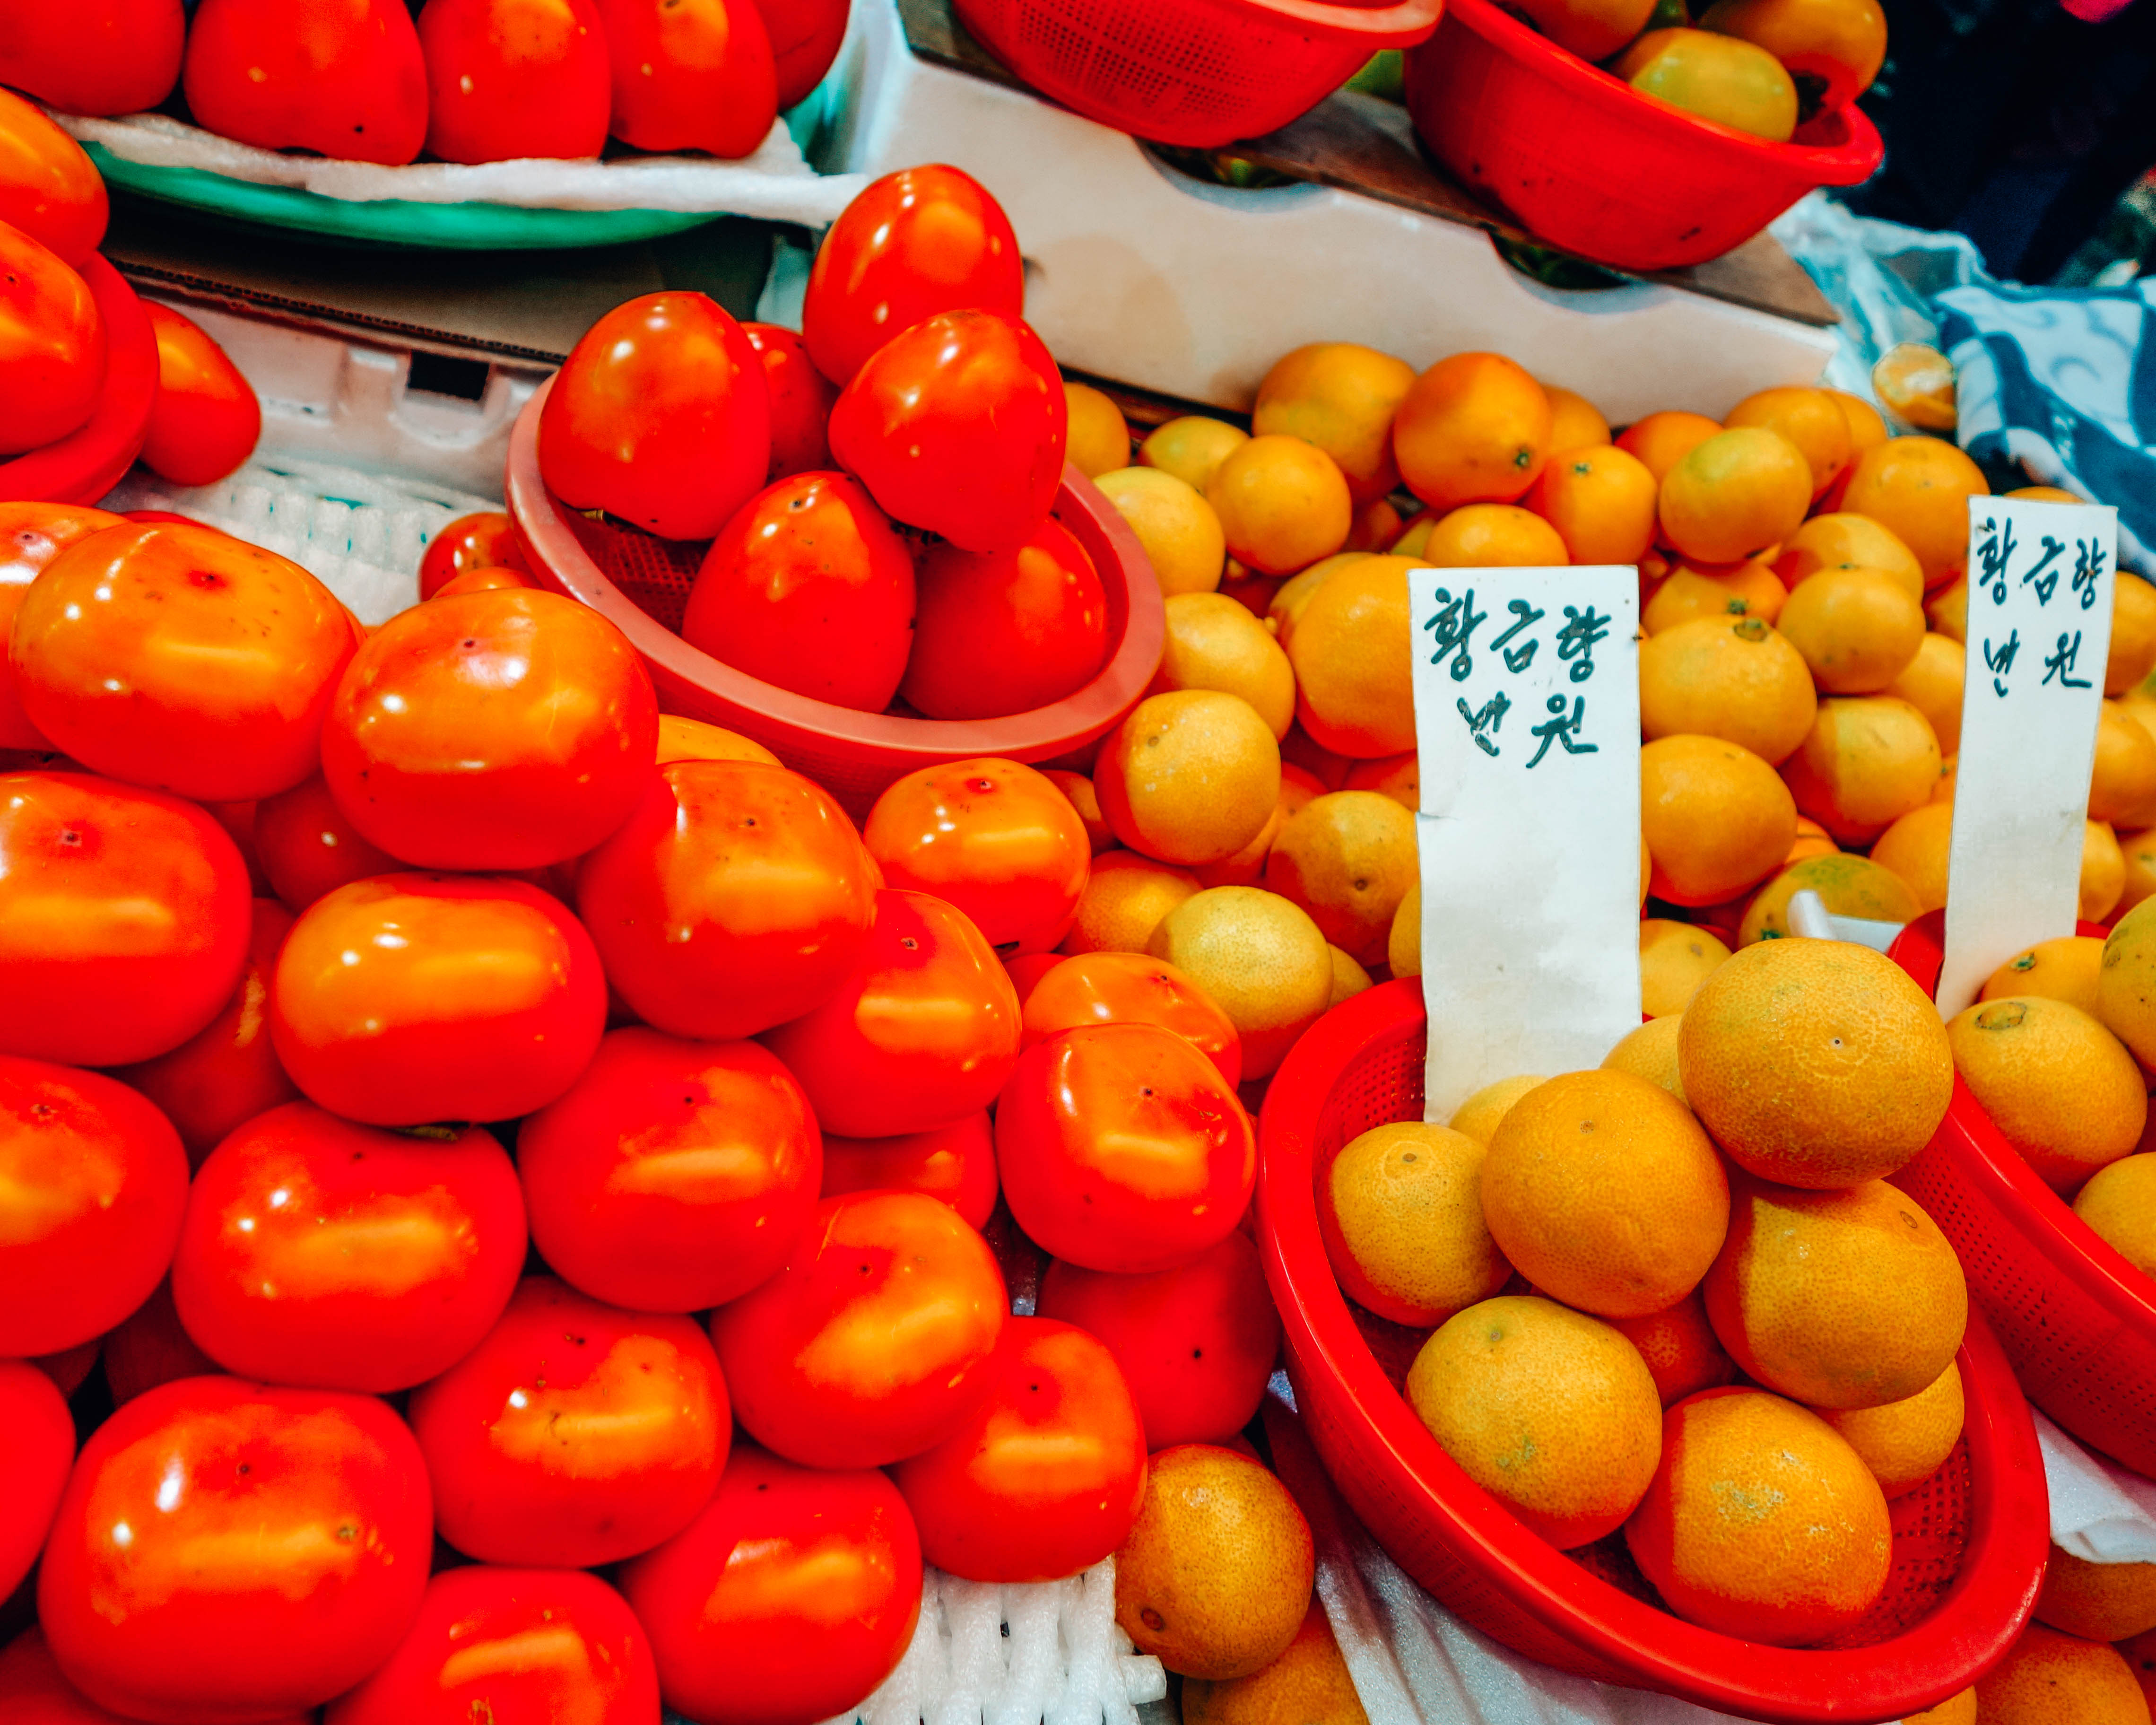 Oranges at street market in South Korea